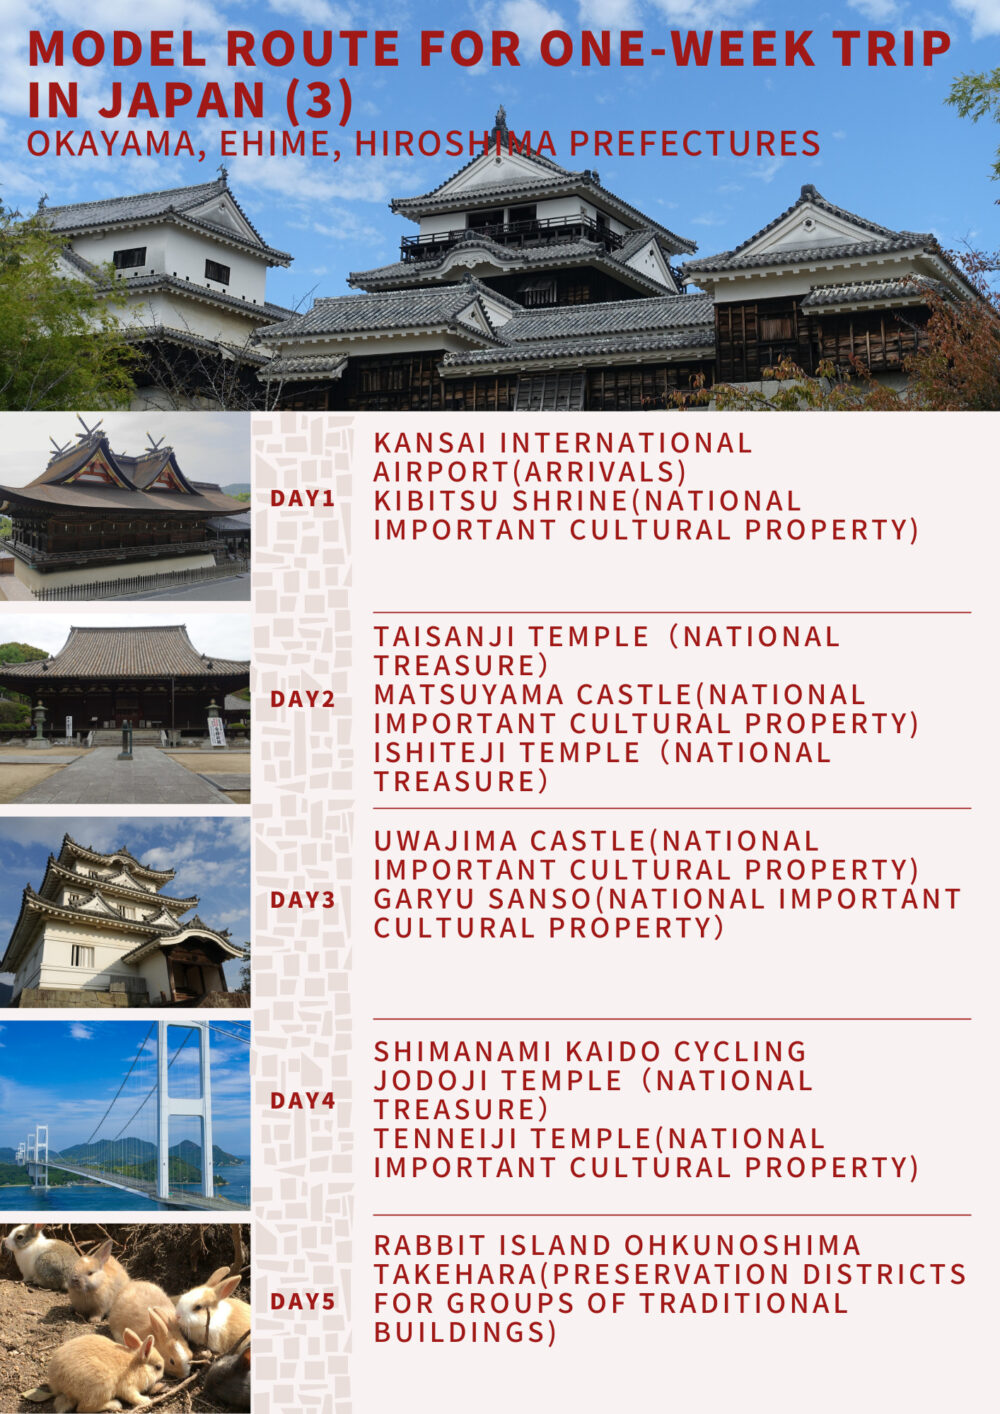 Model route for one-week trip in Japan (3)